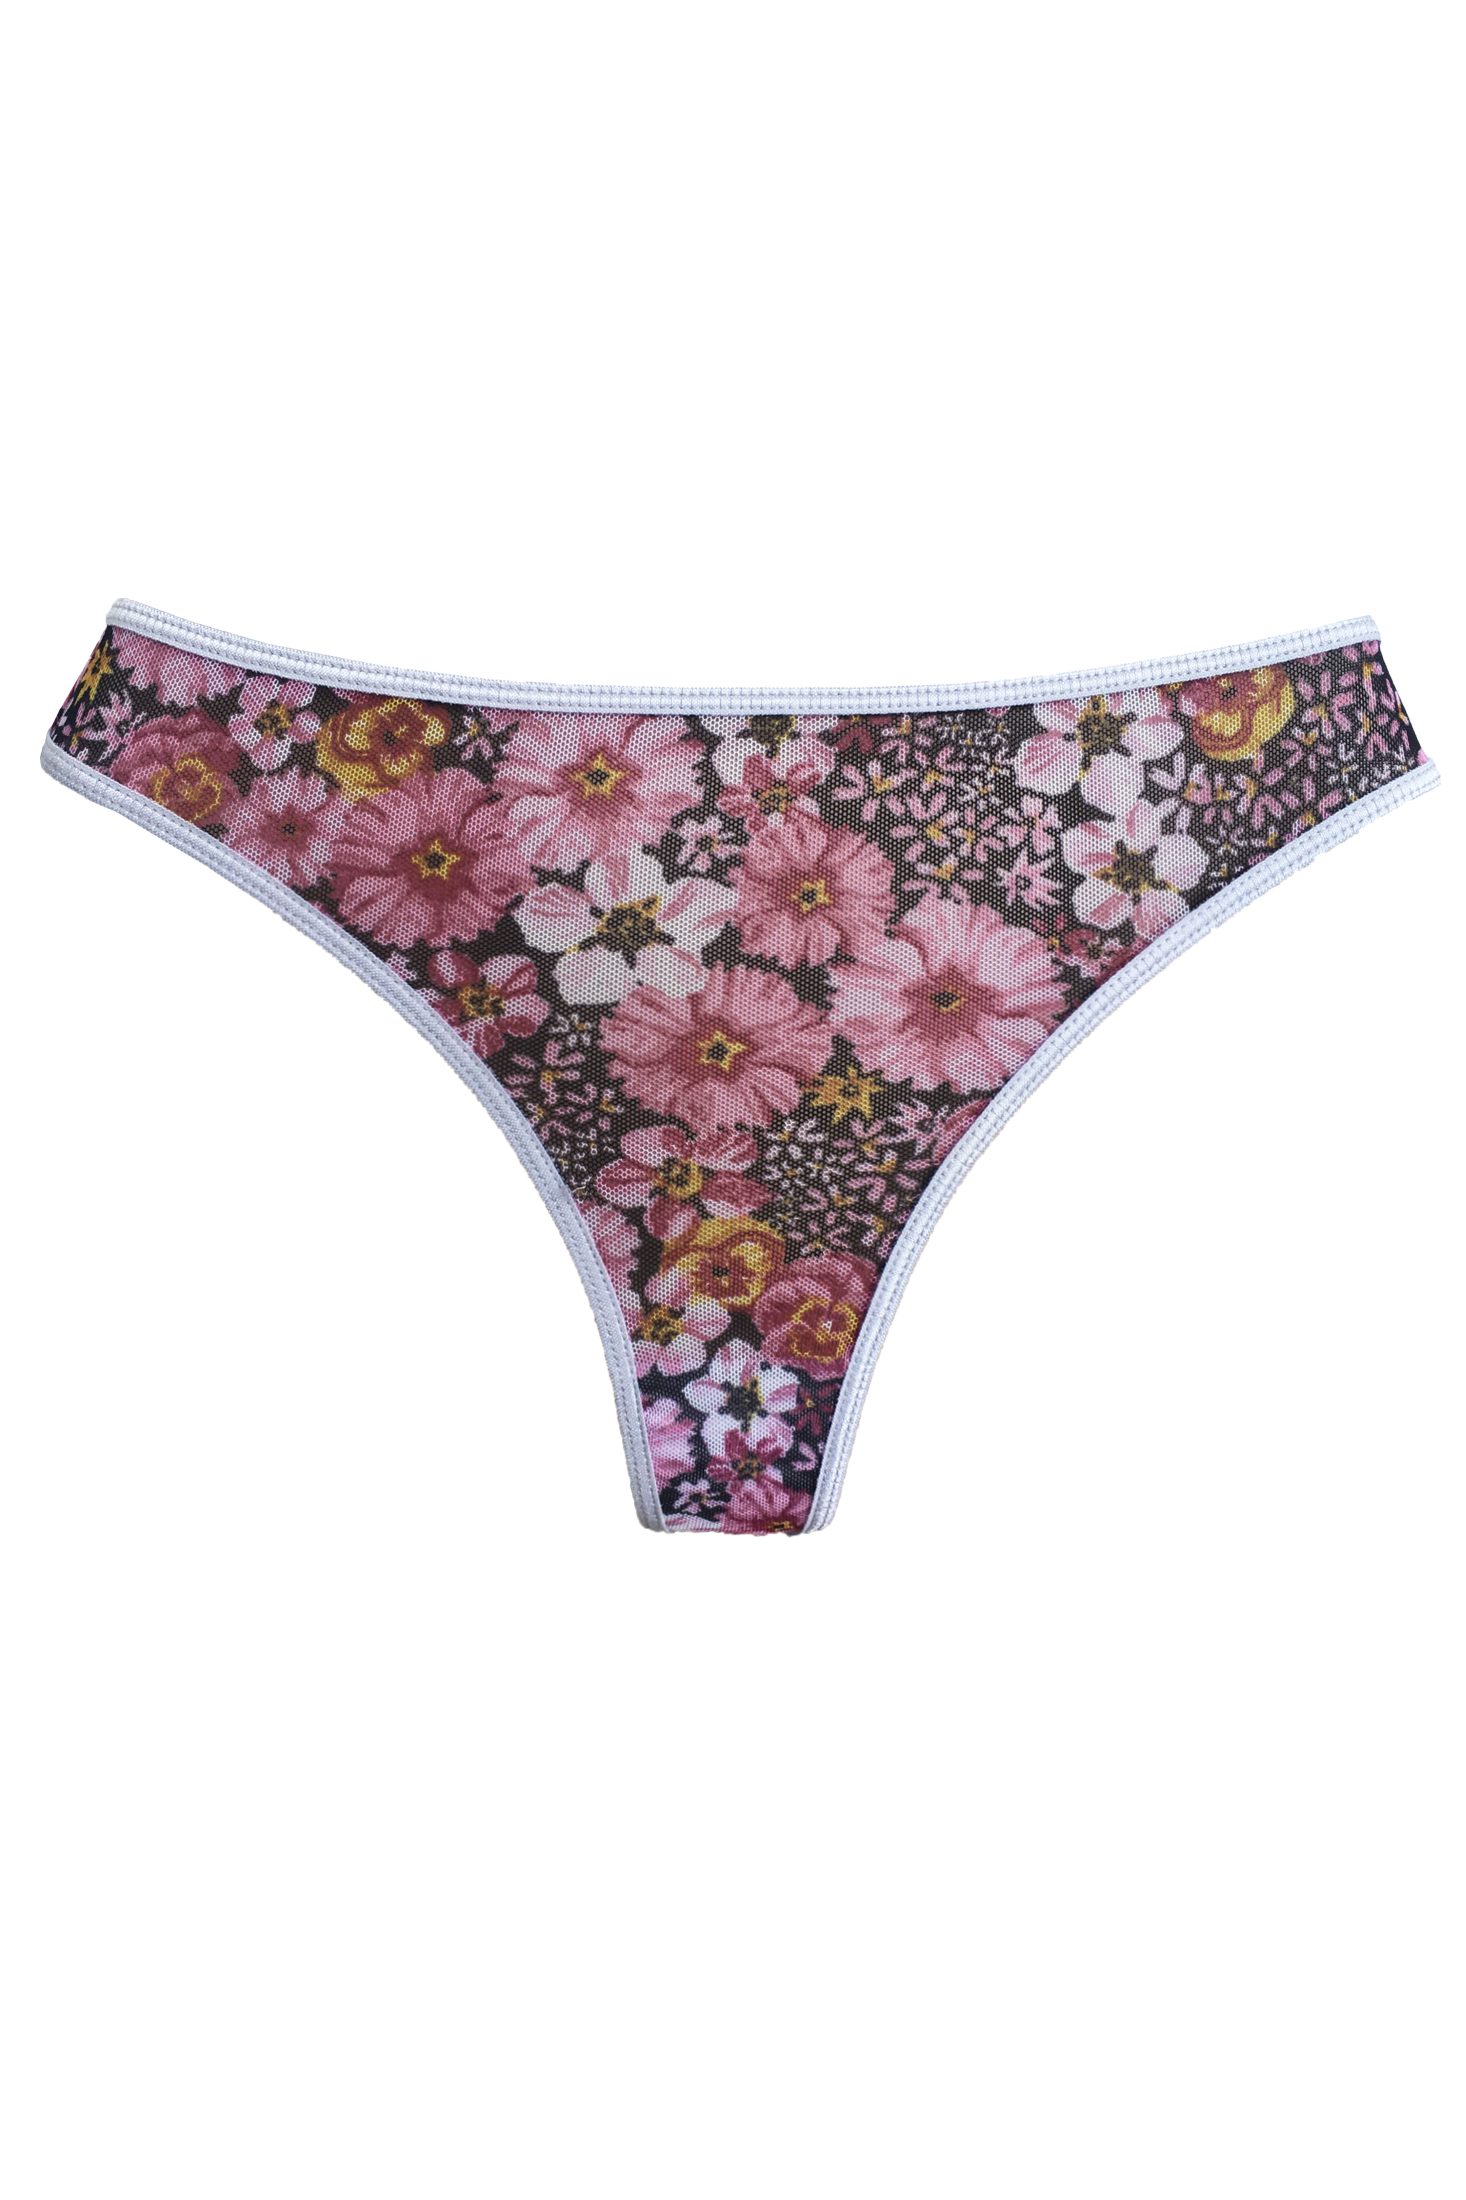 Lingerie Letters Spring Thong - Women's Underwear Online